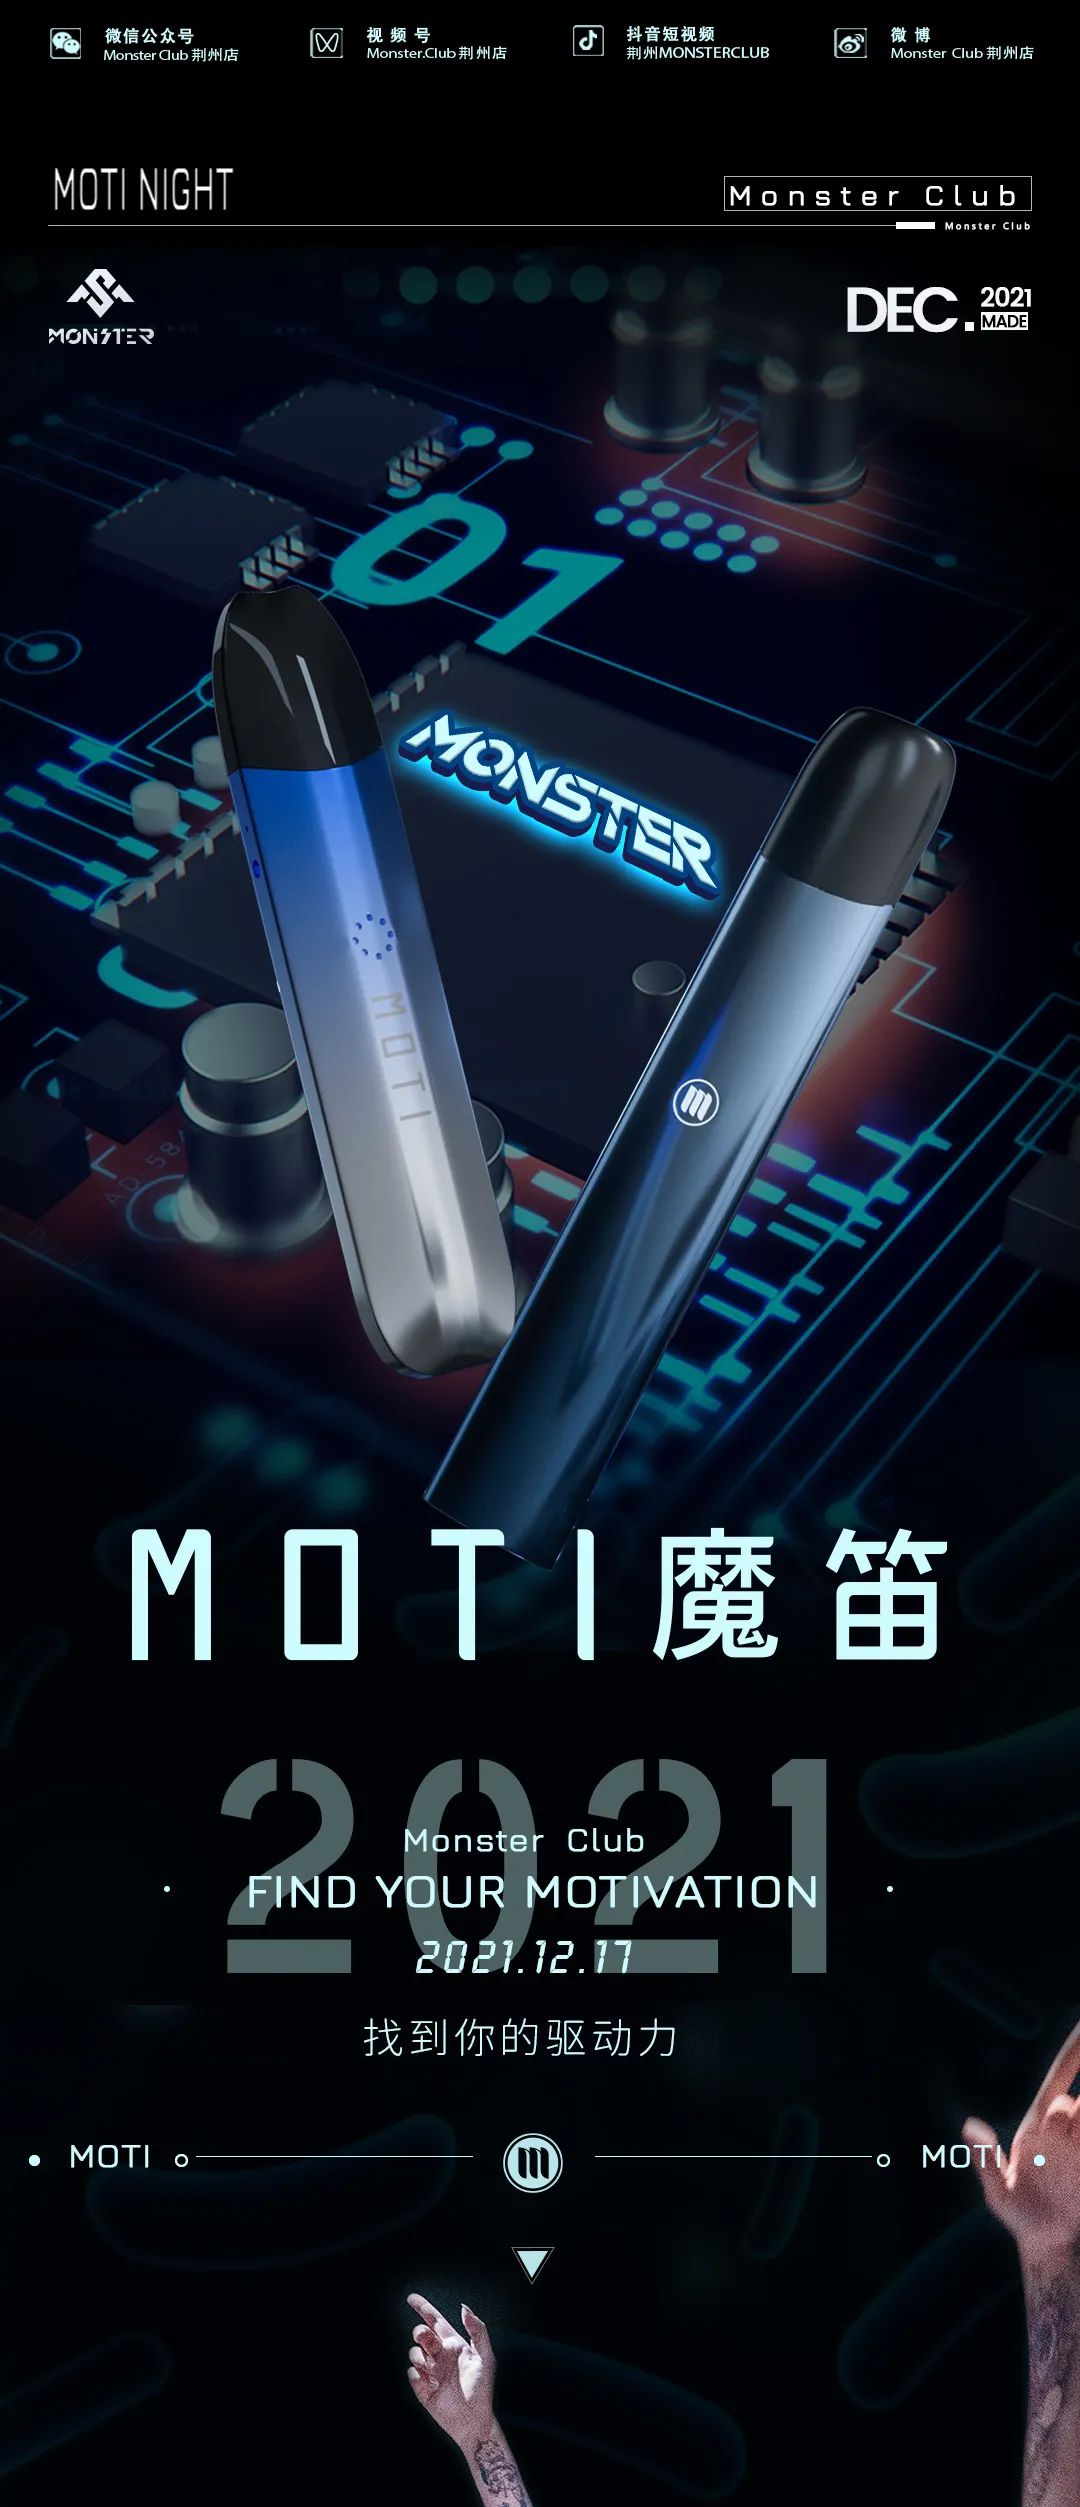 Monster Club ∣12.17 MOTI找到你的驱动力-荆州怪兽酒吧/Monster Club